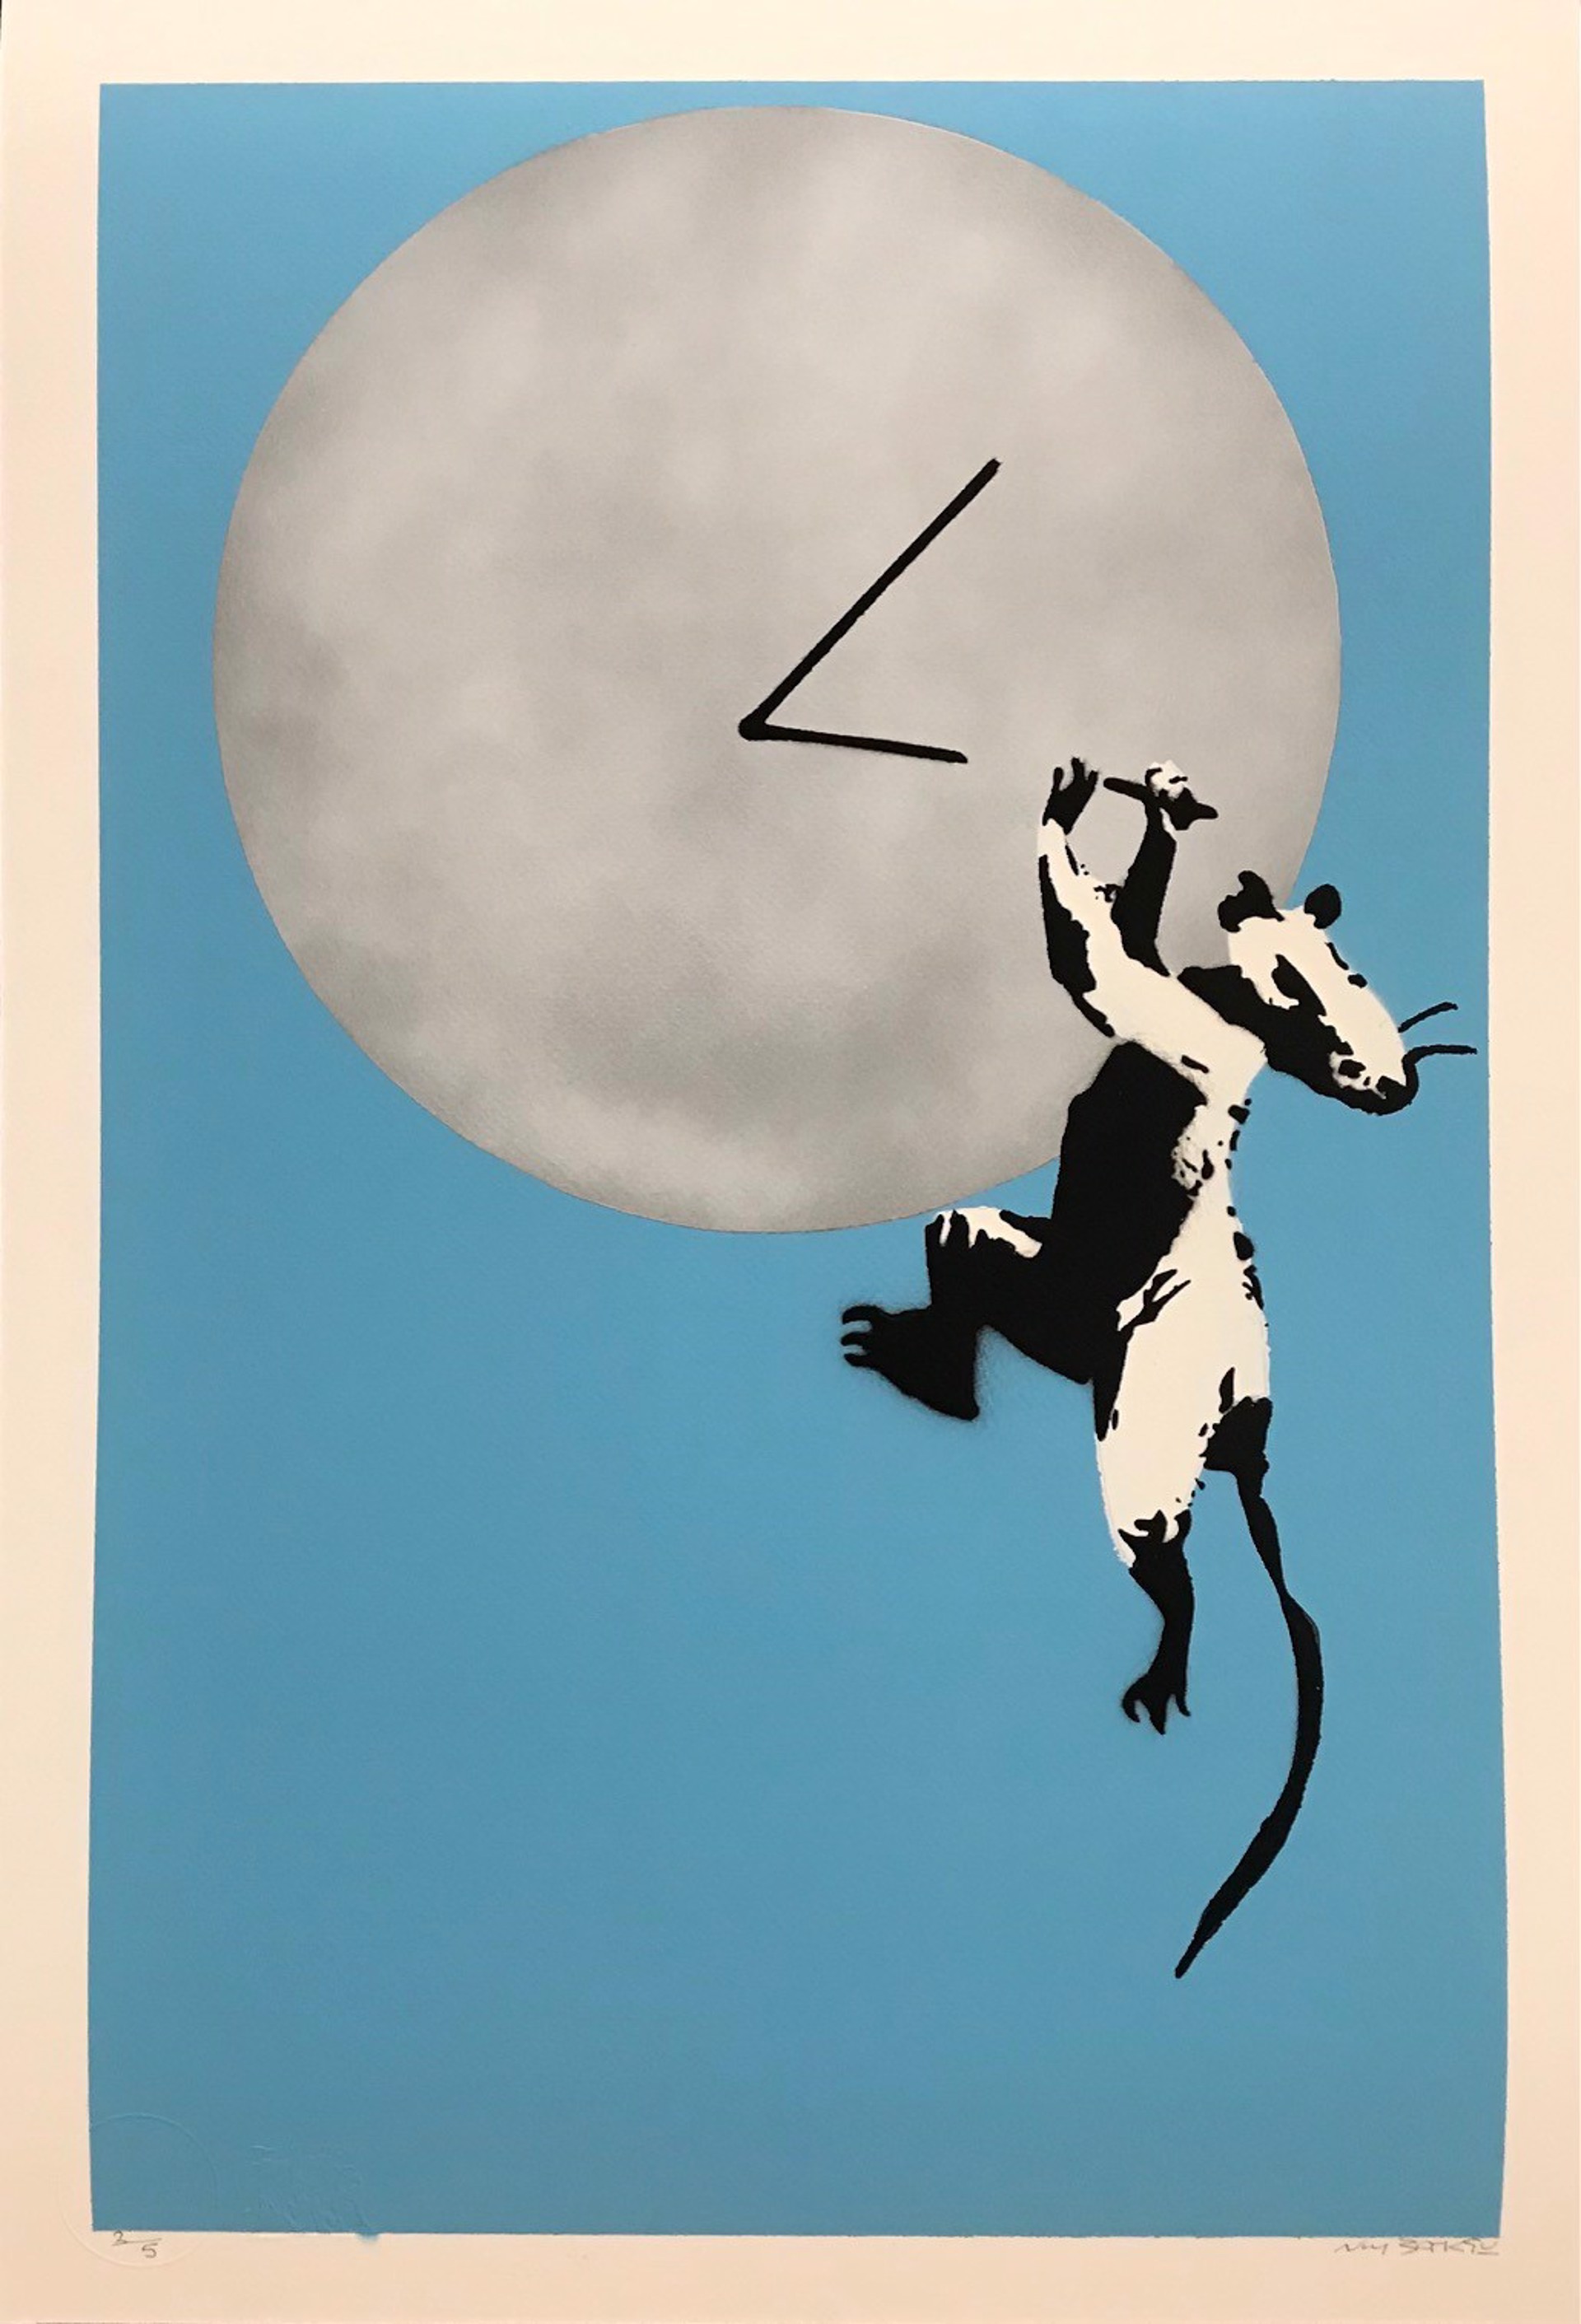 Clock Rat (2/5) by Not Banksy